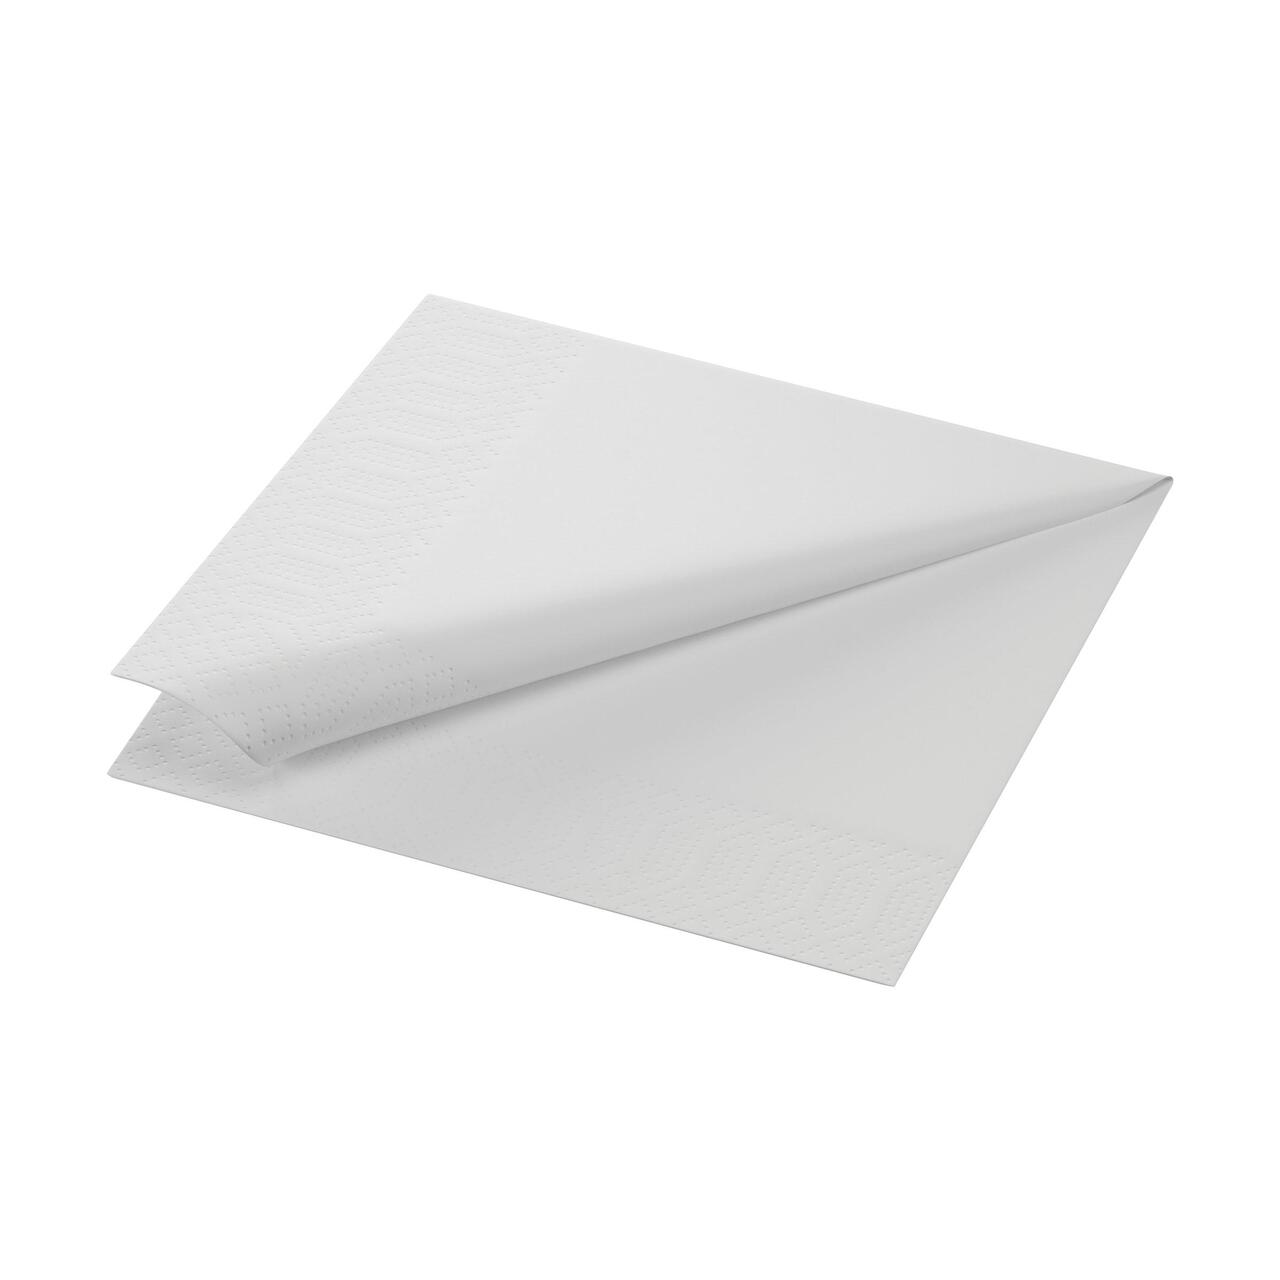 White Compostable Paper Napkins 125 per pack